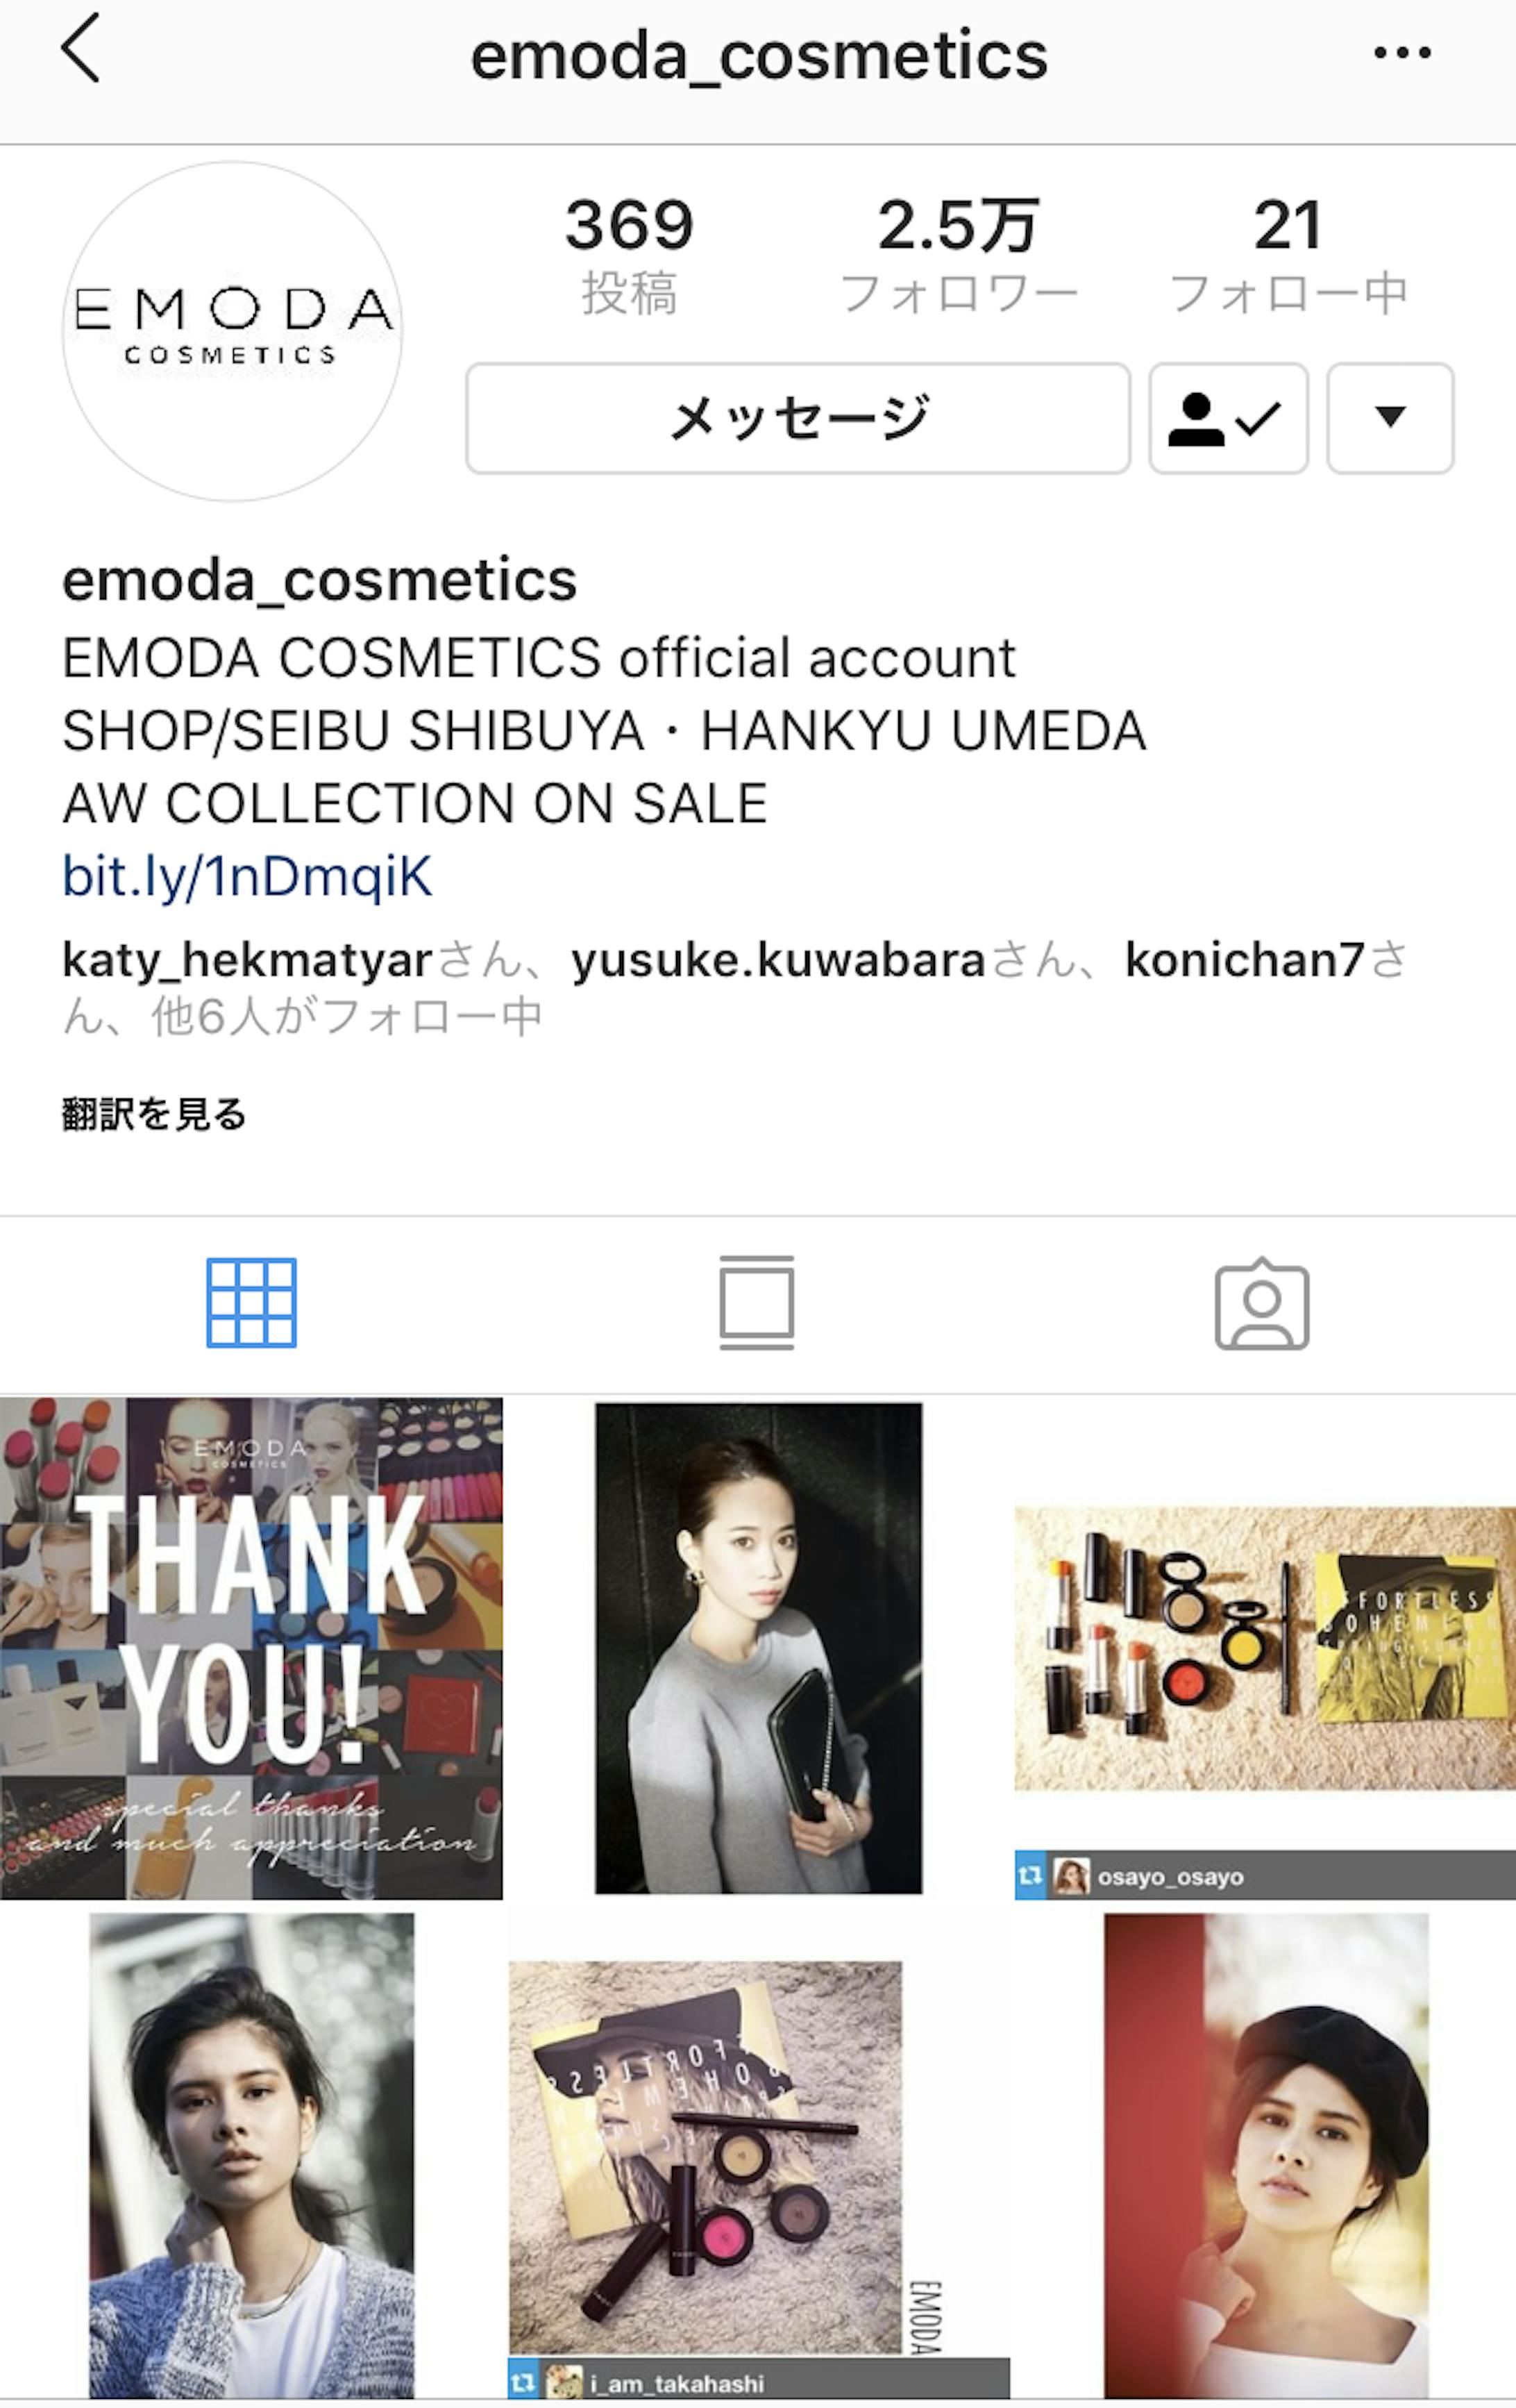 emoda cosmetics Instagram -1